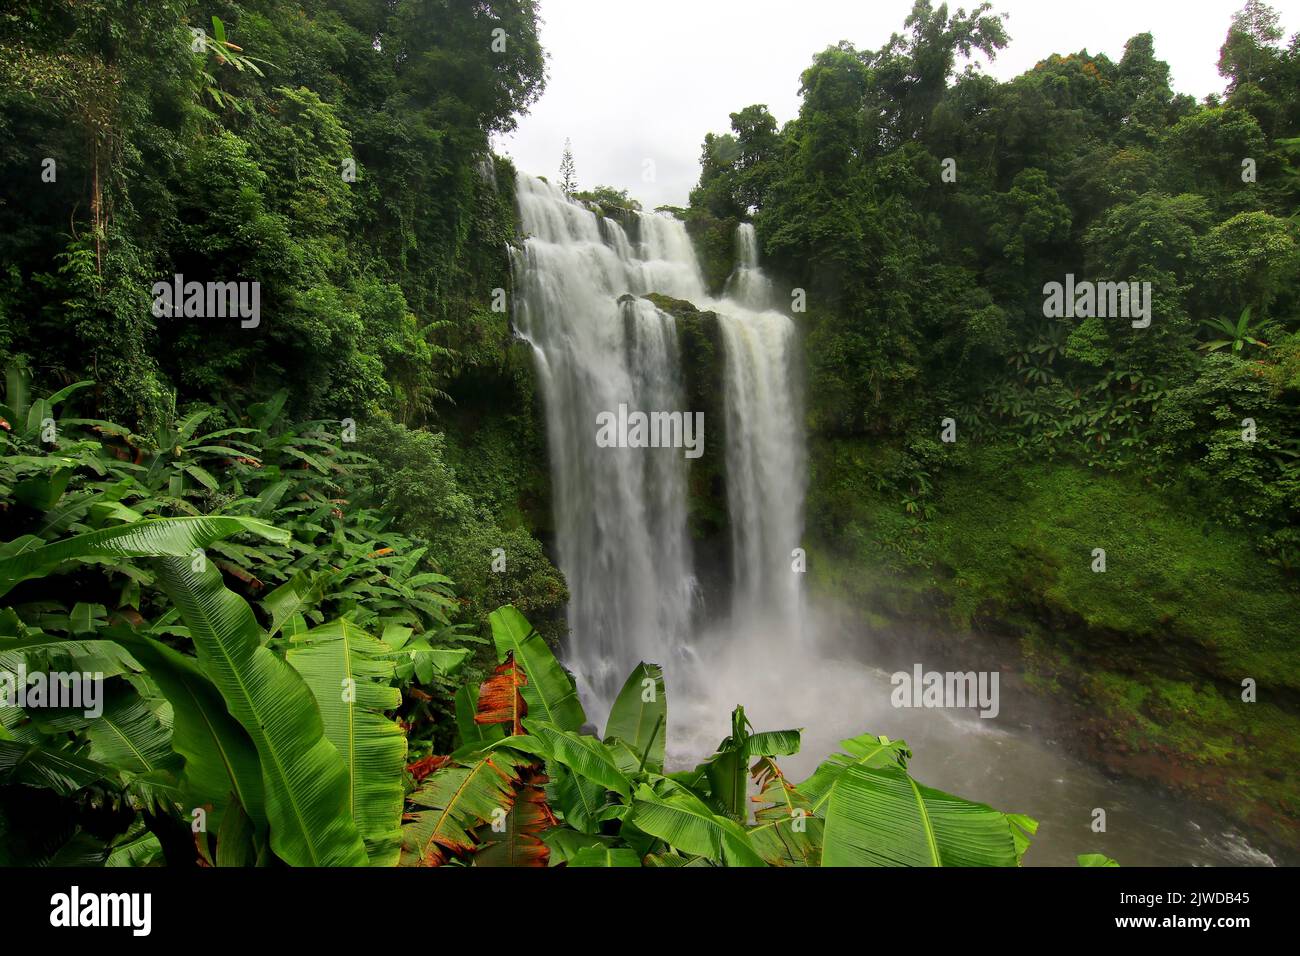 big cascade, beautiful waterfall in green forest Stock Photo